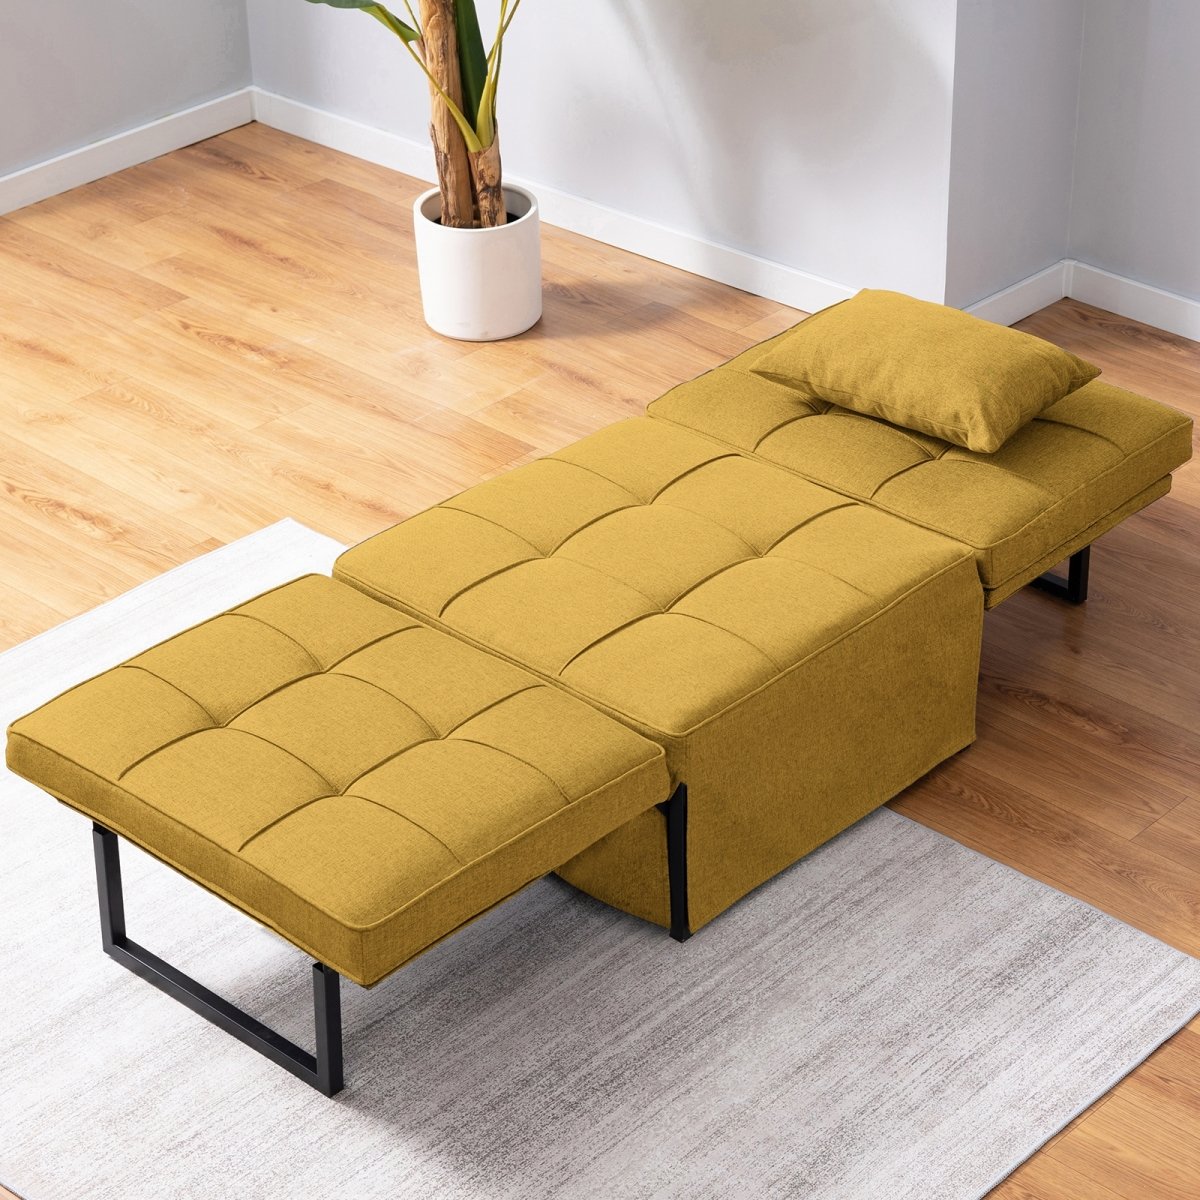 Sofa Bed | 4 In1 Pull Out Sleeper Chair Multi-Functional Adjustable Recliner - Mjkonesofa